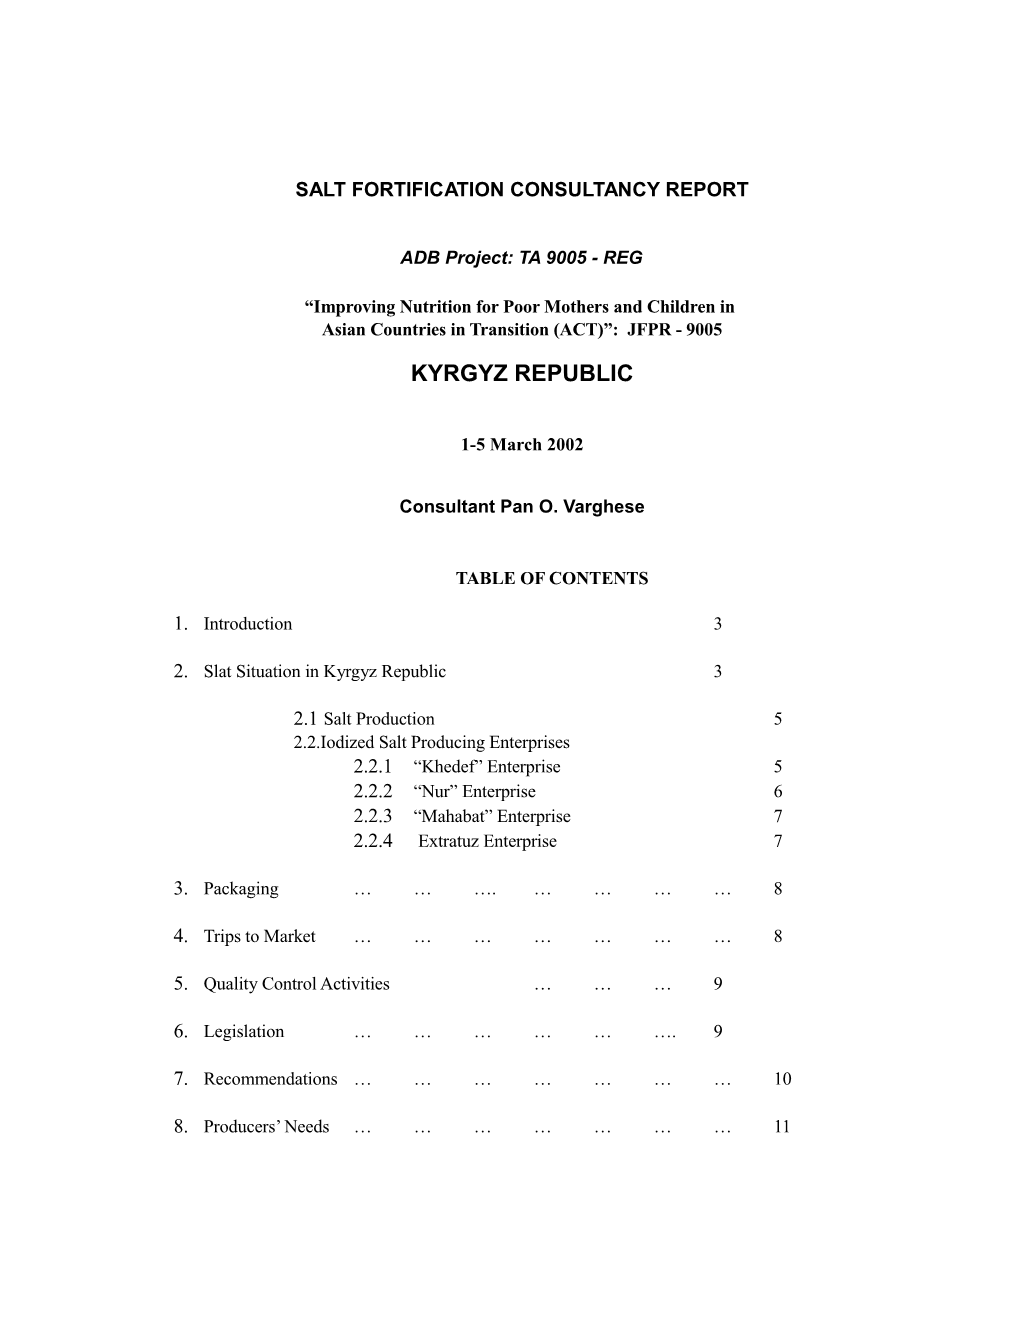 Salt Fortification Consultancy Report